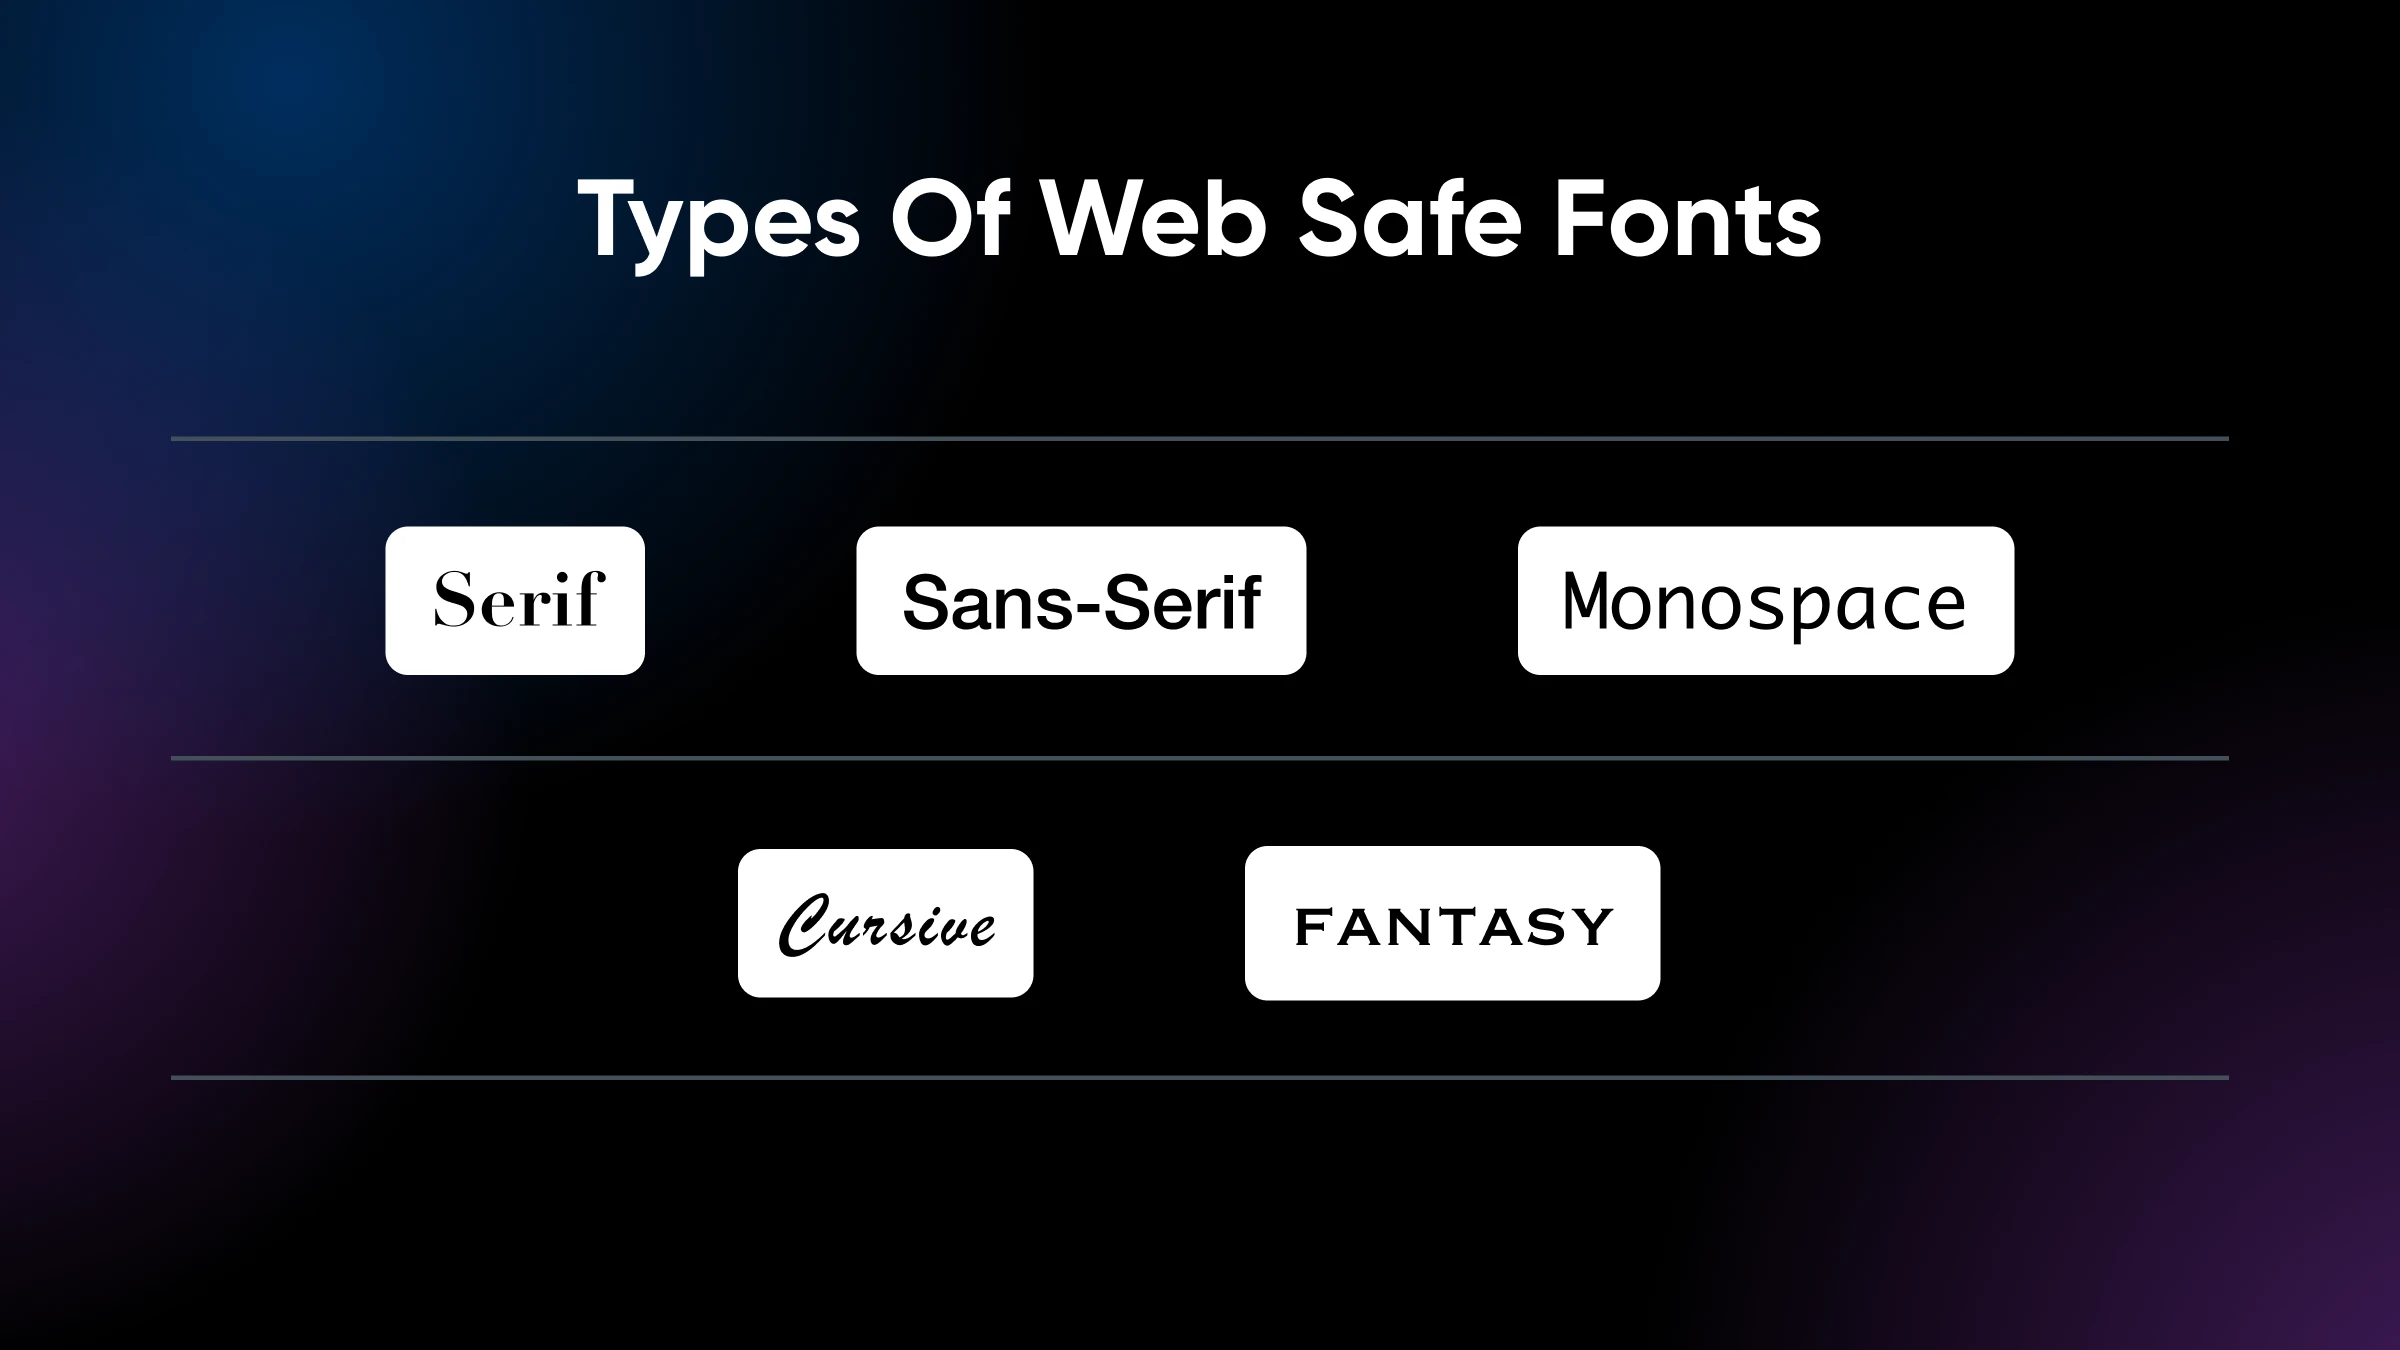 Infographic showing types of web safe fonts: Serif, Sans-Serif, Monospace, Cursive, and Fantasy. Dark gradient background.